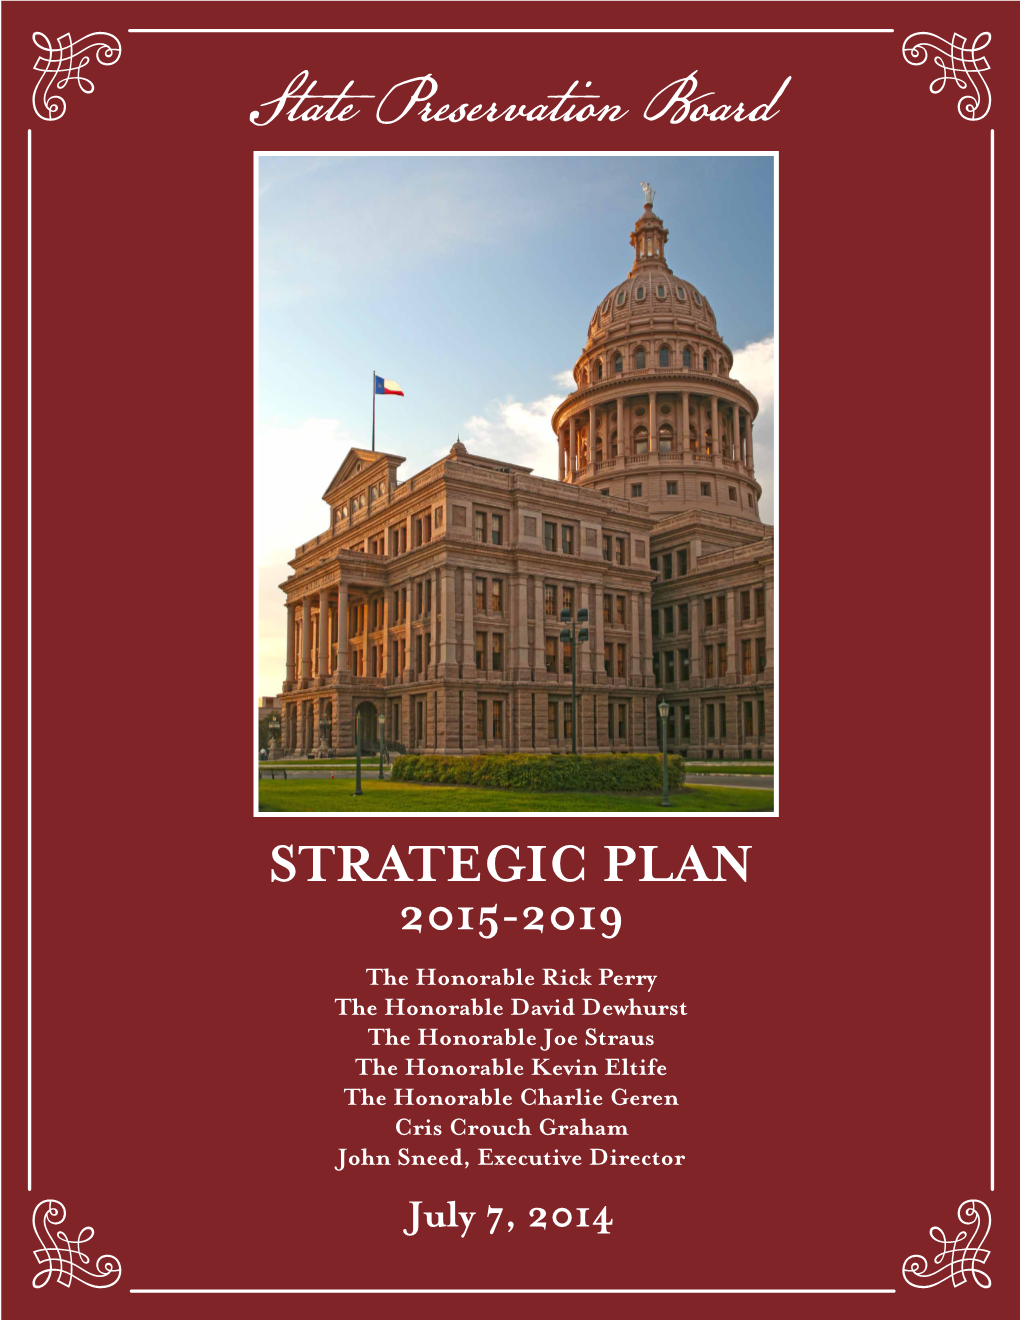 FY 2015 to 2019 Strategic Plan